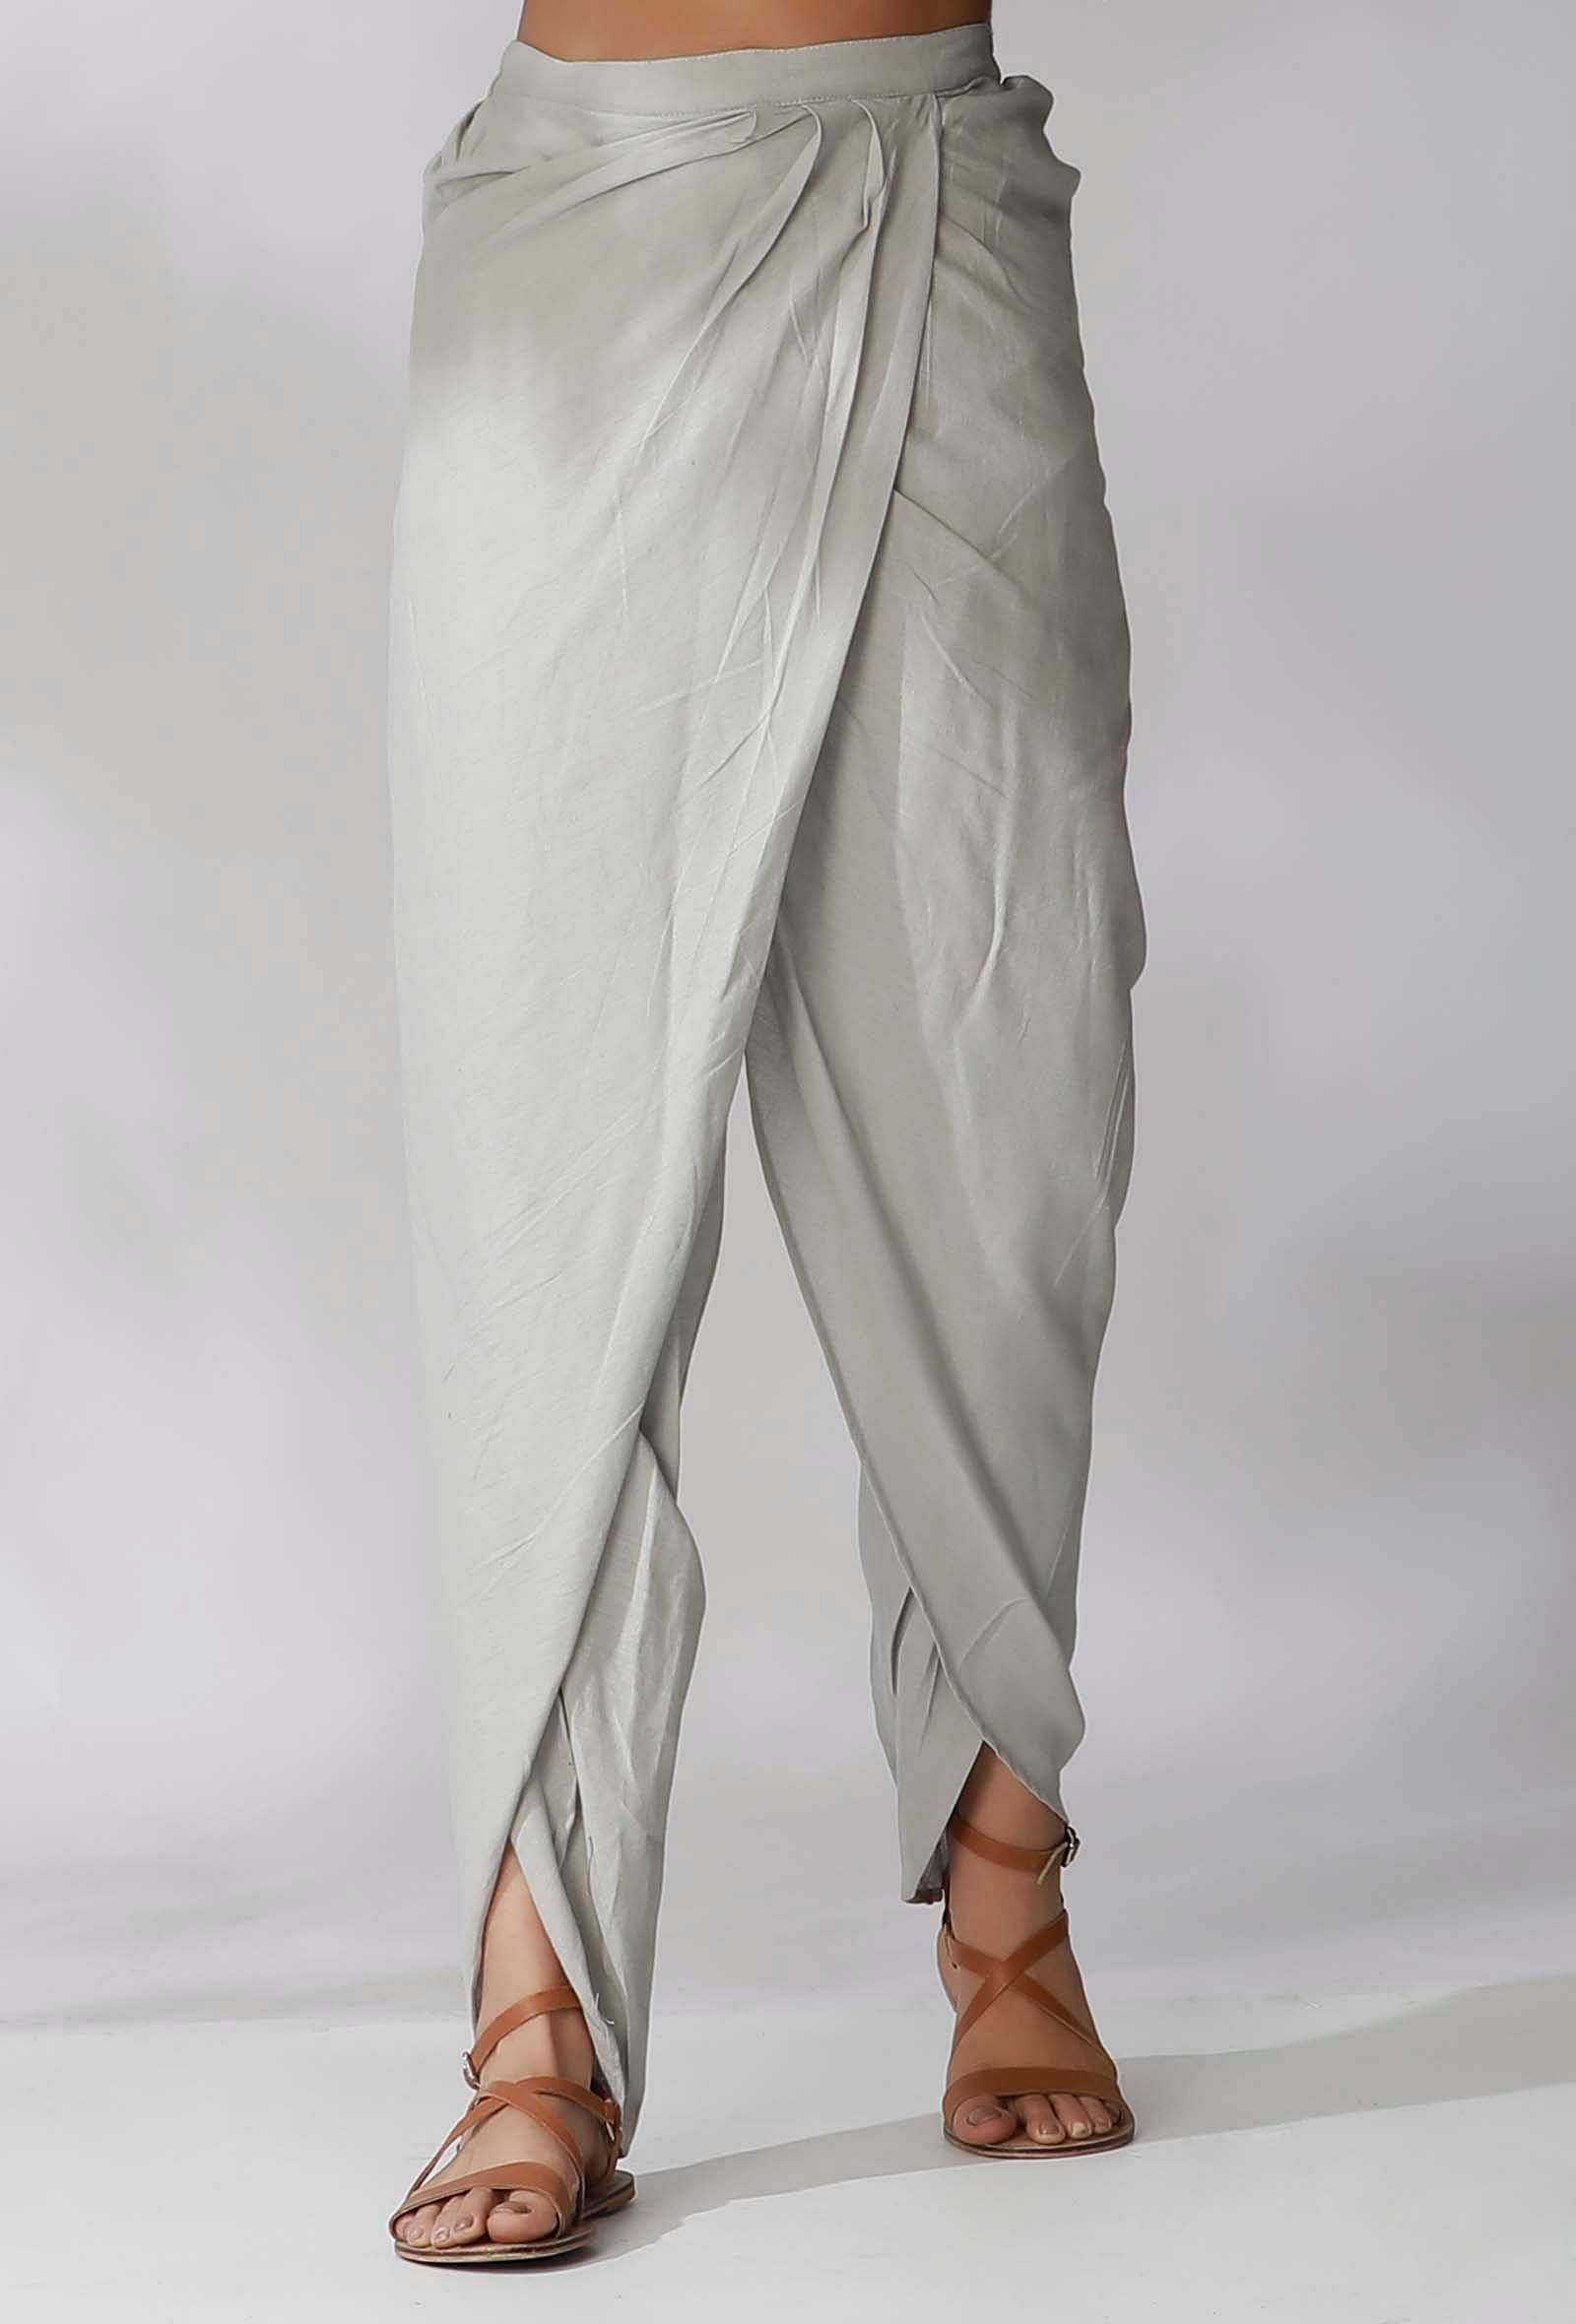 Foil printed Cotton Dhoti Pant in Black | Dhoti pants, Stylish dress  designs, Fashion design clothes